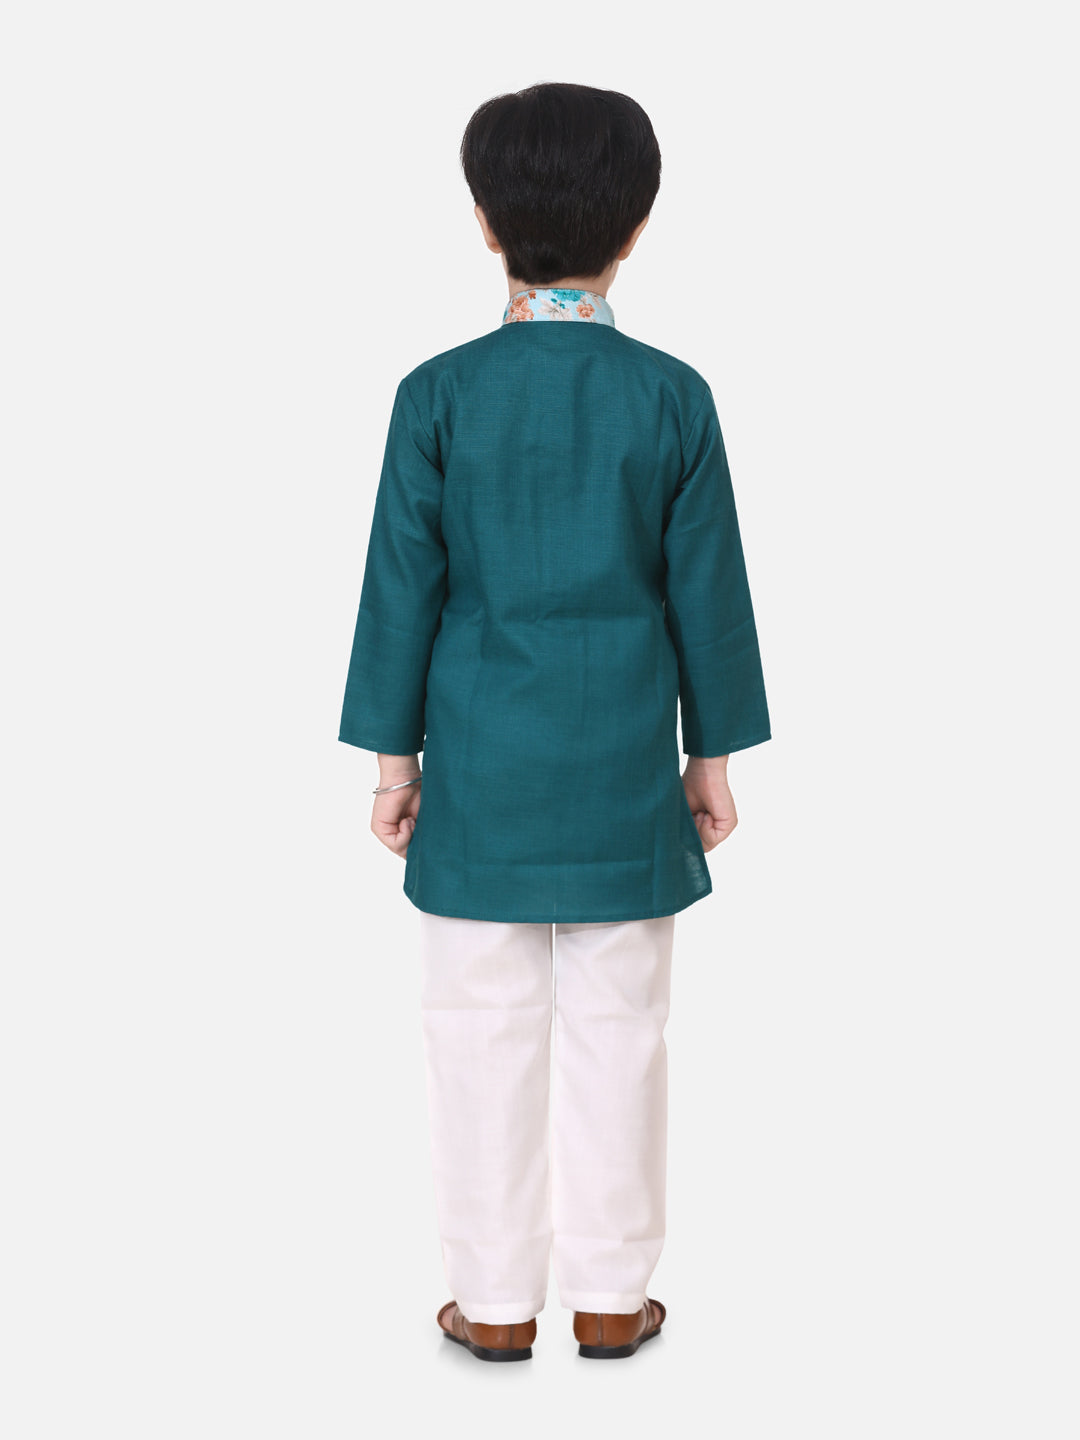 Boy's Green Attached Floral Print Jacket Cotton Kurta Pajama - BOWNBEE